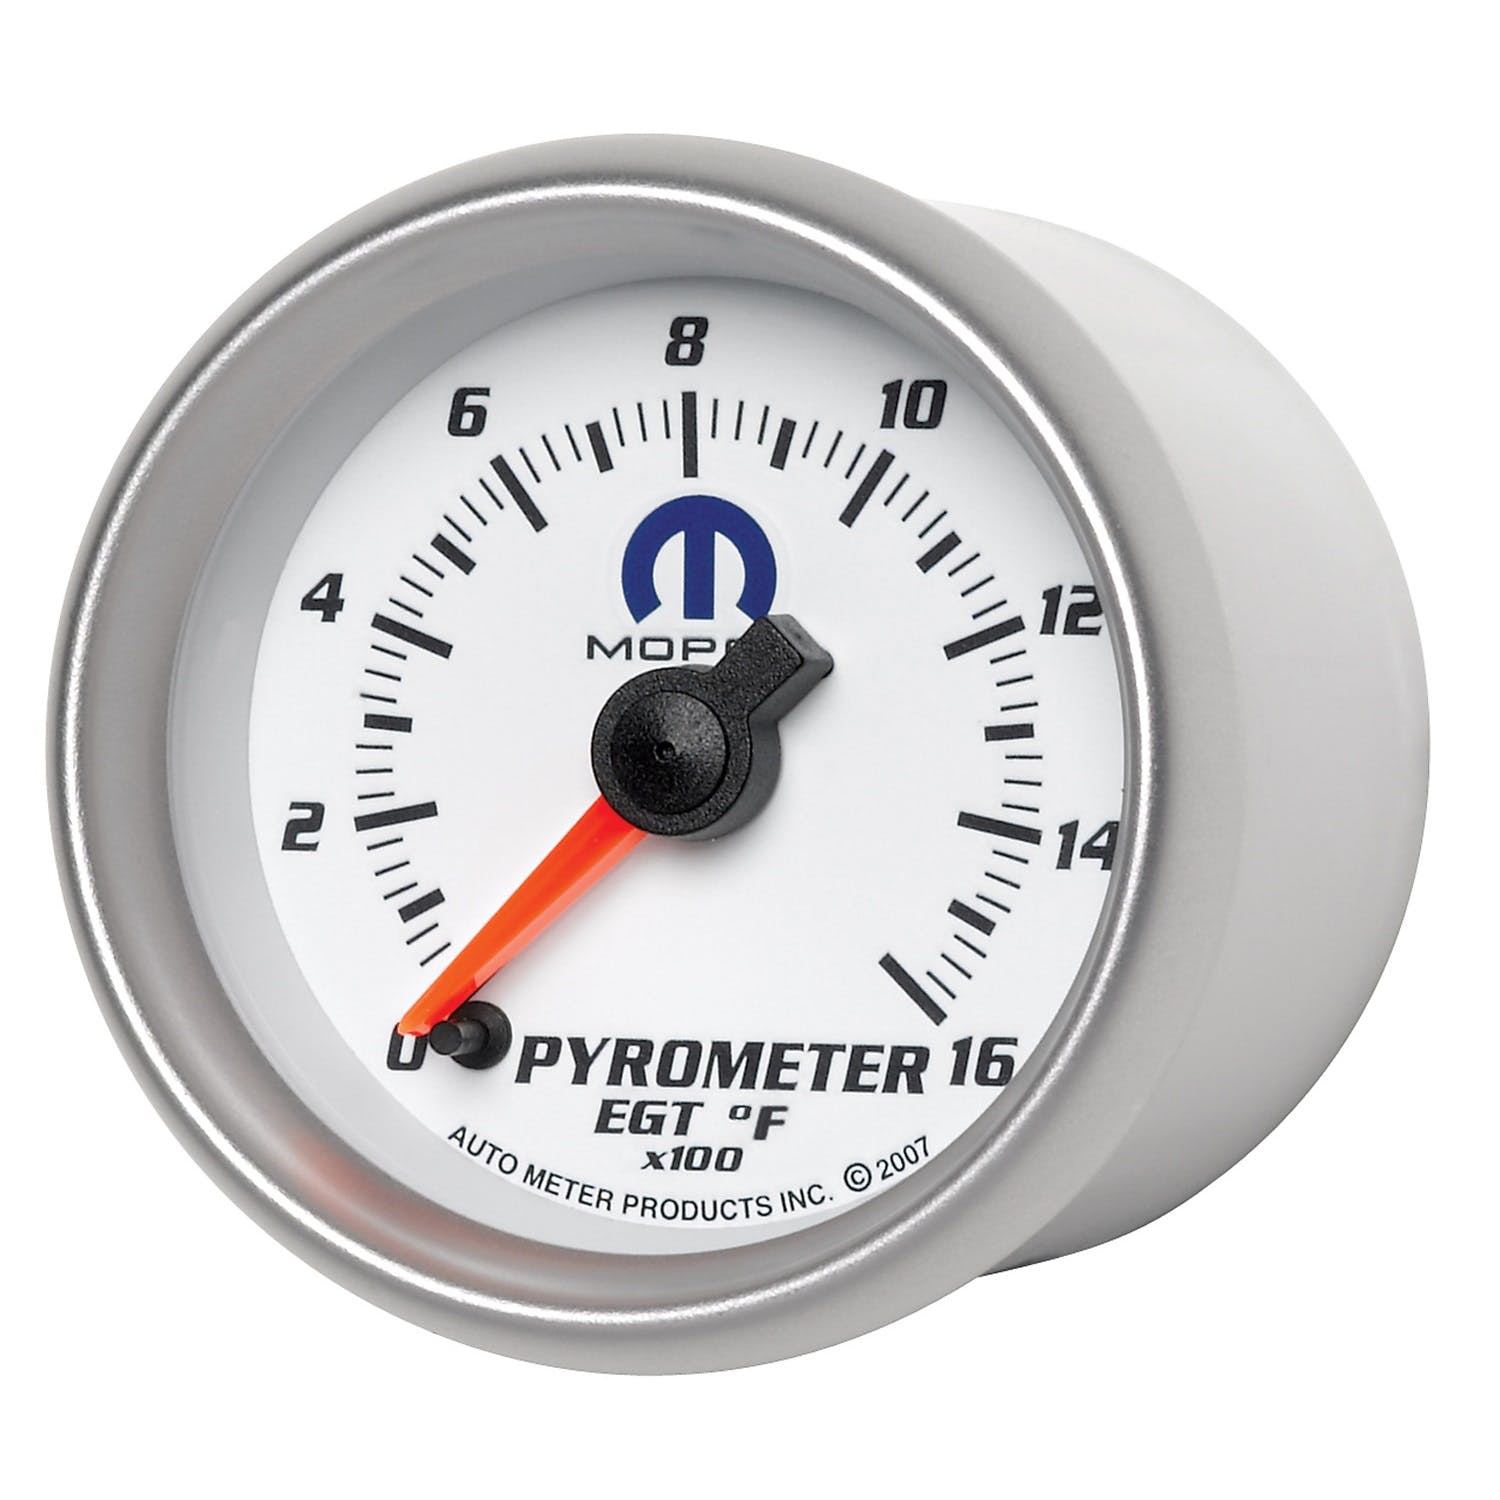 AutoMeter Products 880031 Mopar #77060046, 2-1/16 Pyro Kit, 0-1600° F, FSE